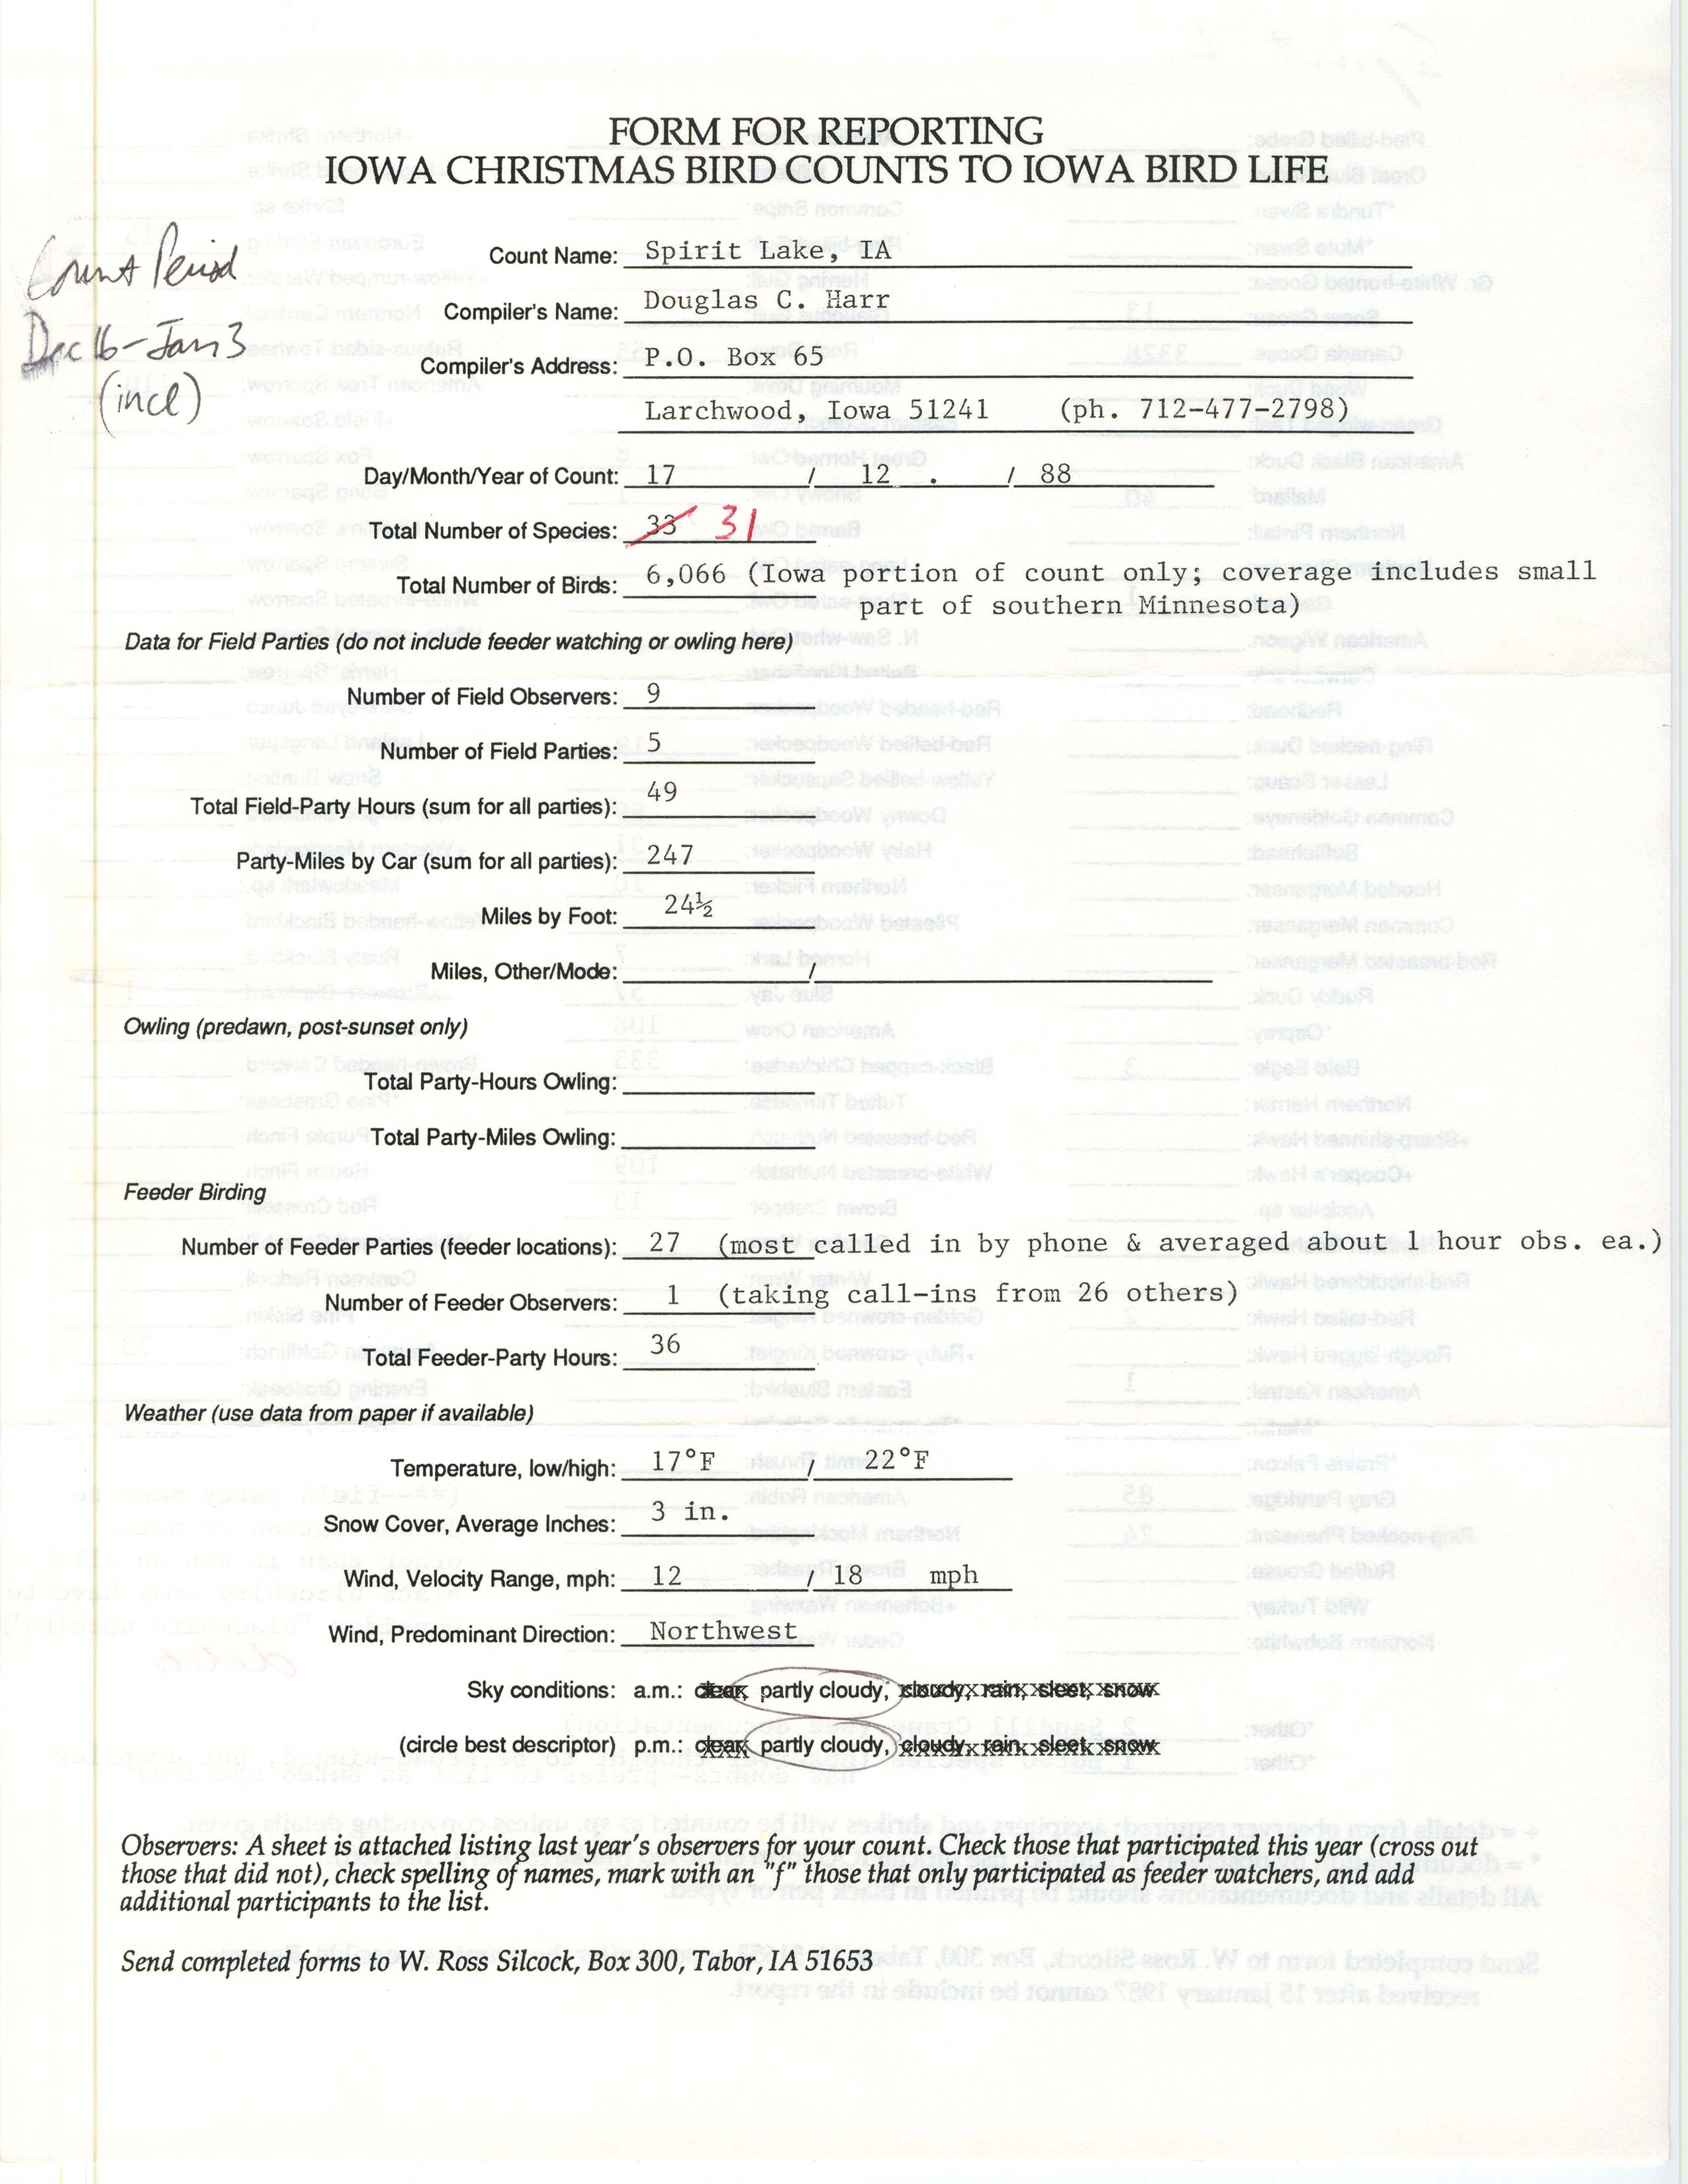 Form for reporting Iowa Christmas bird counts to Iowa Bird Life, Douglas C. Harr, December 17, 1988